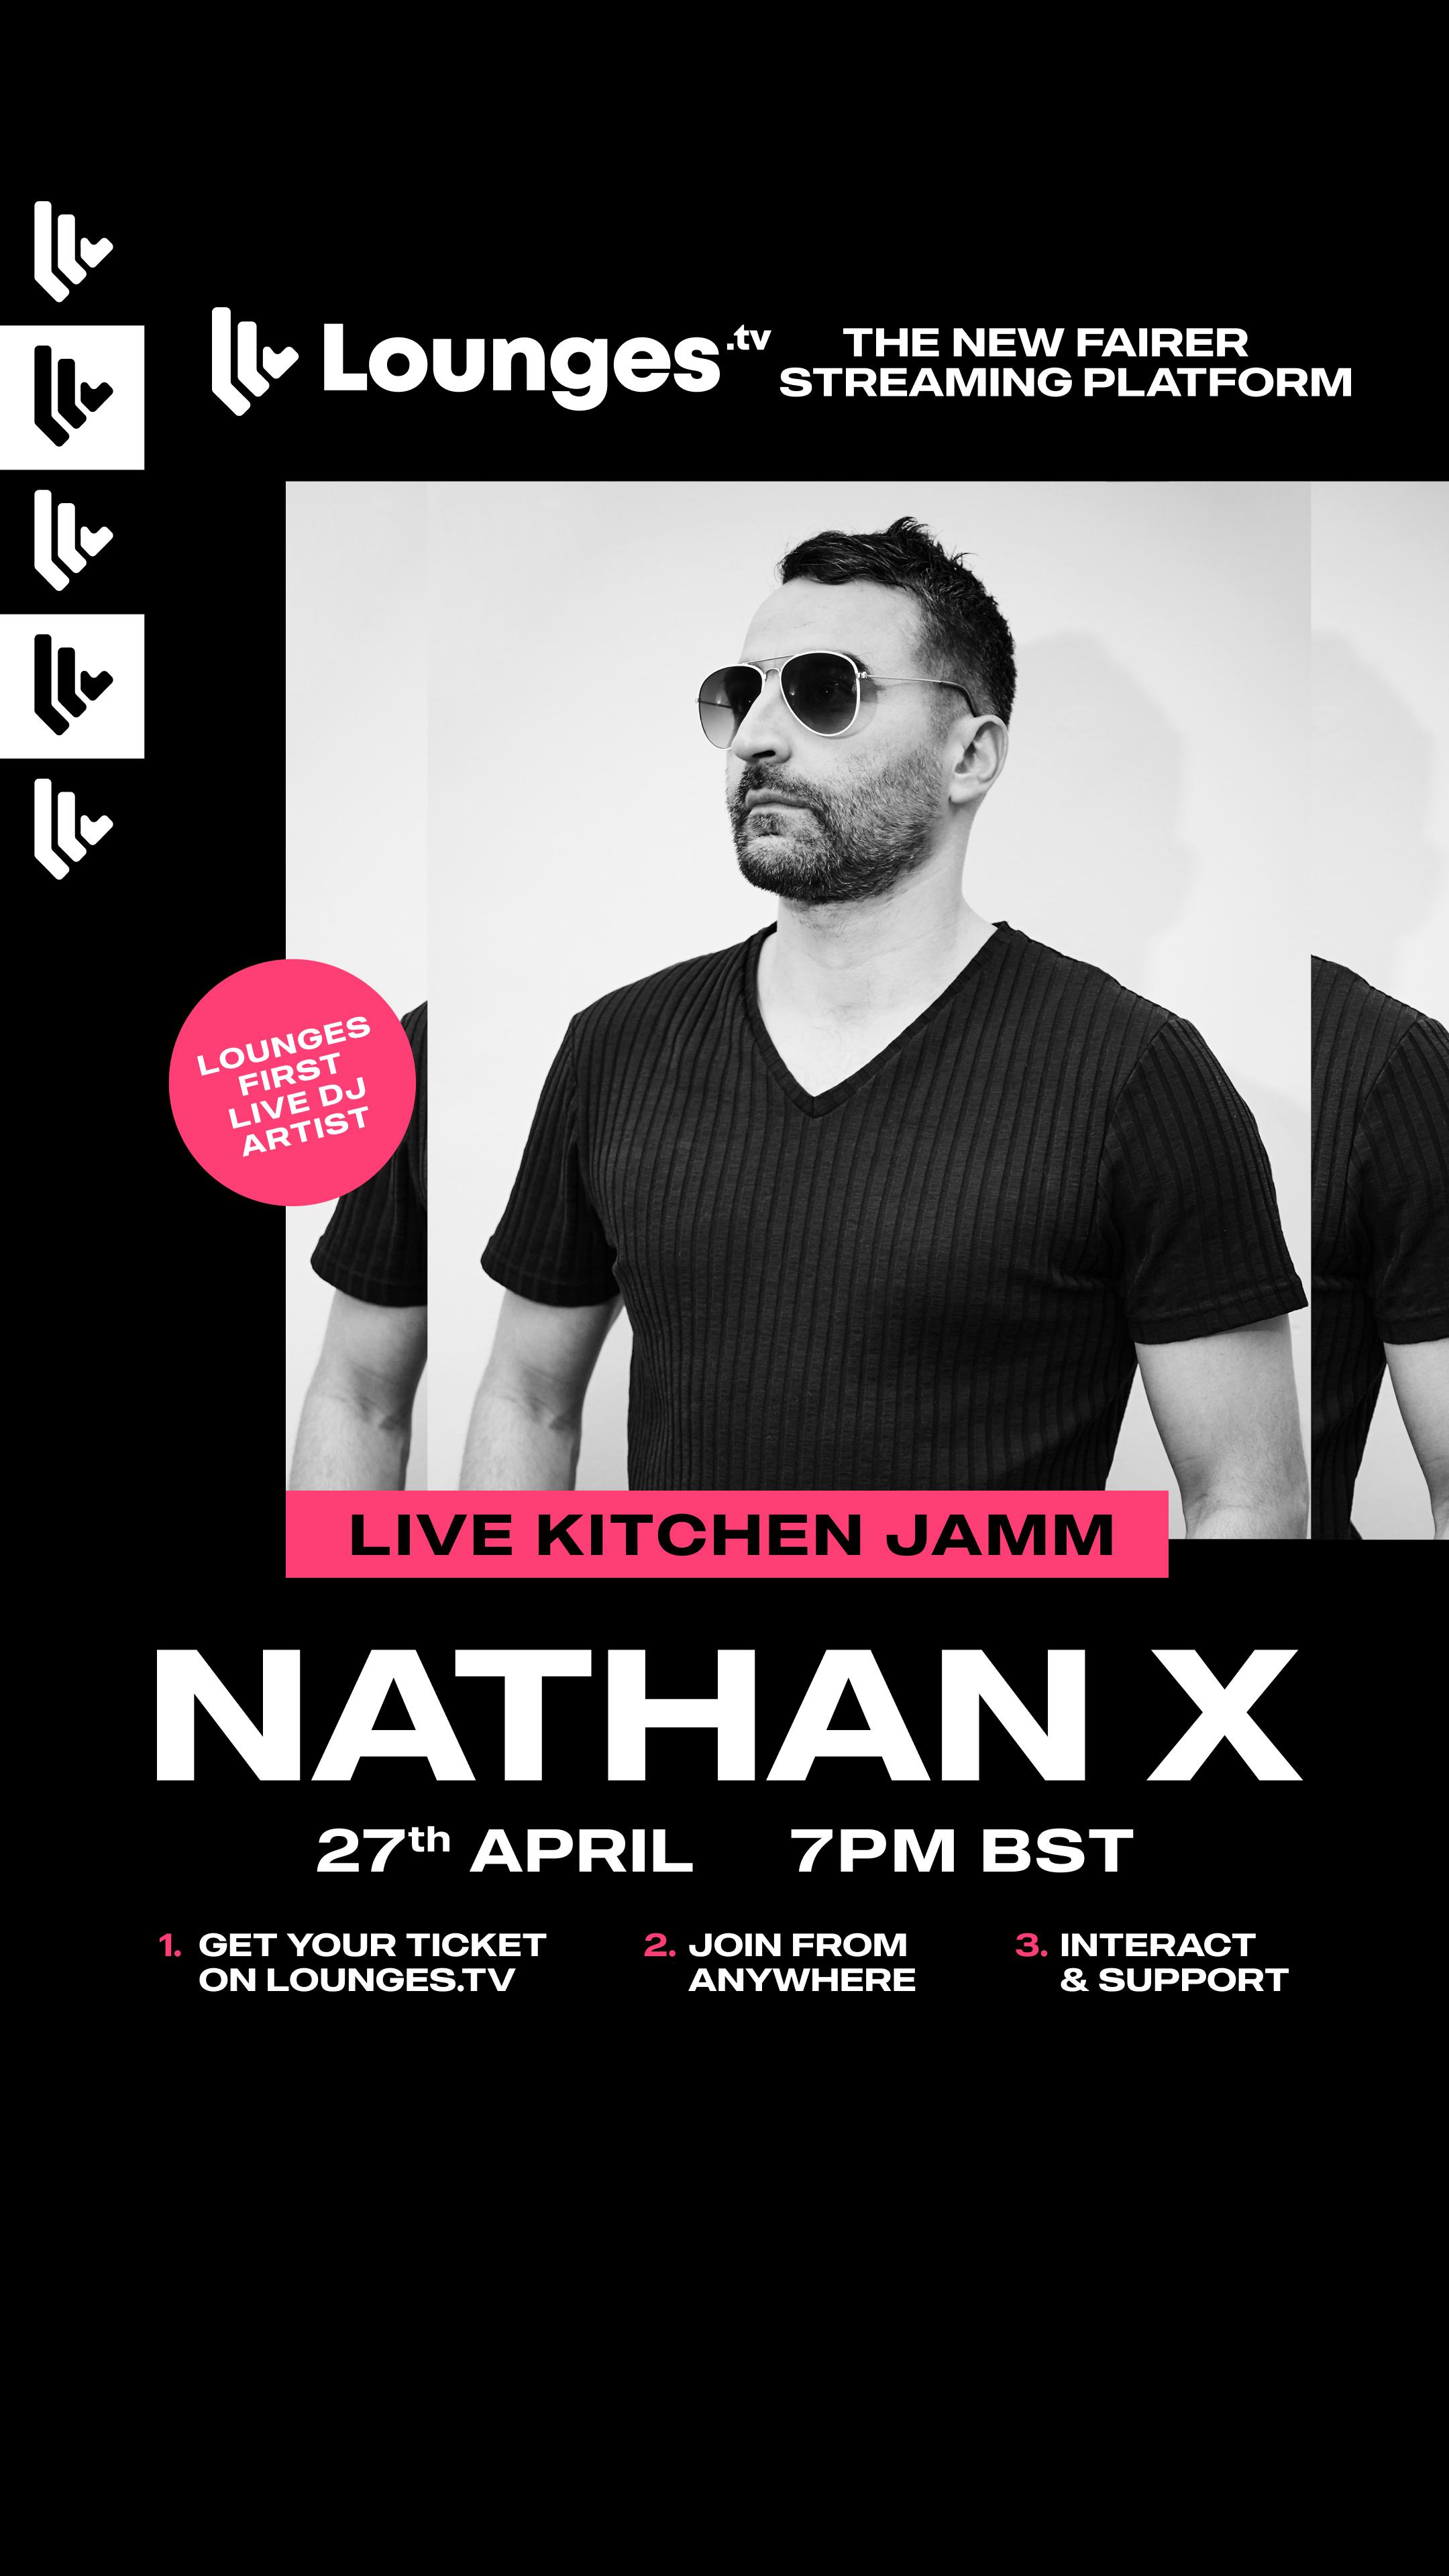 Nathan X Official Live Kitchen Jamm UK